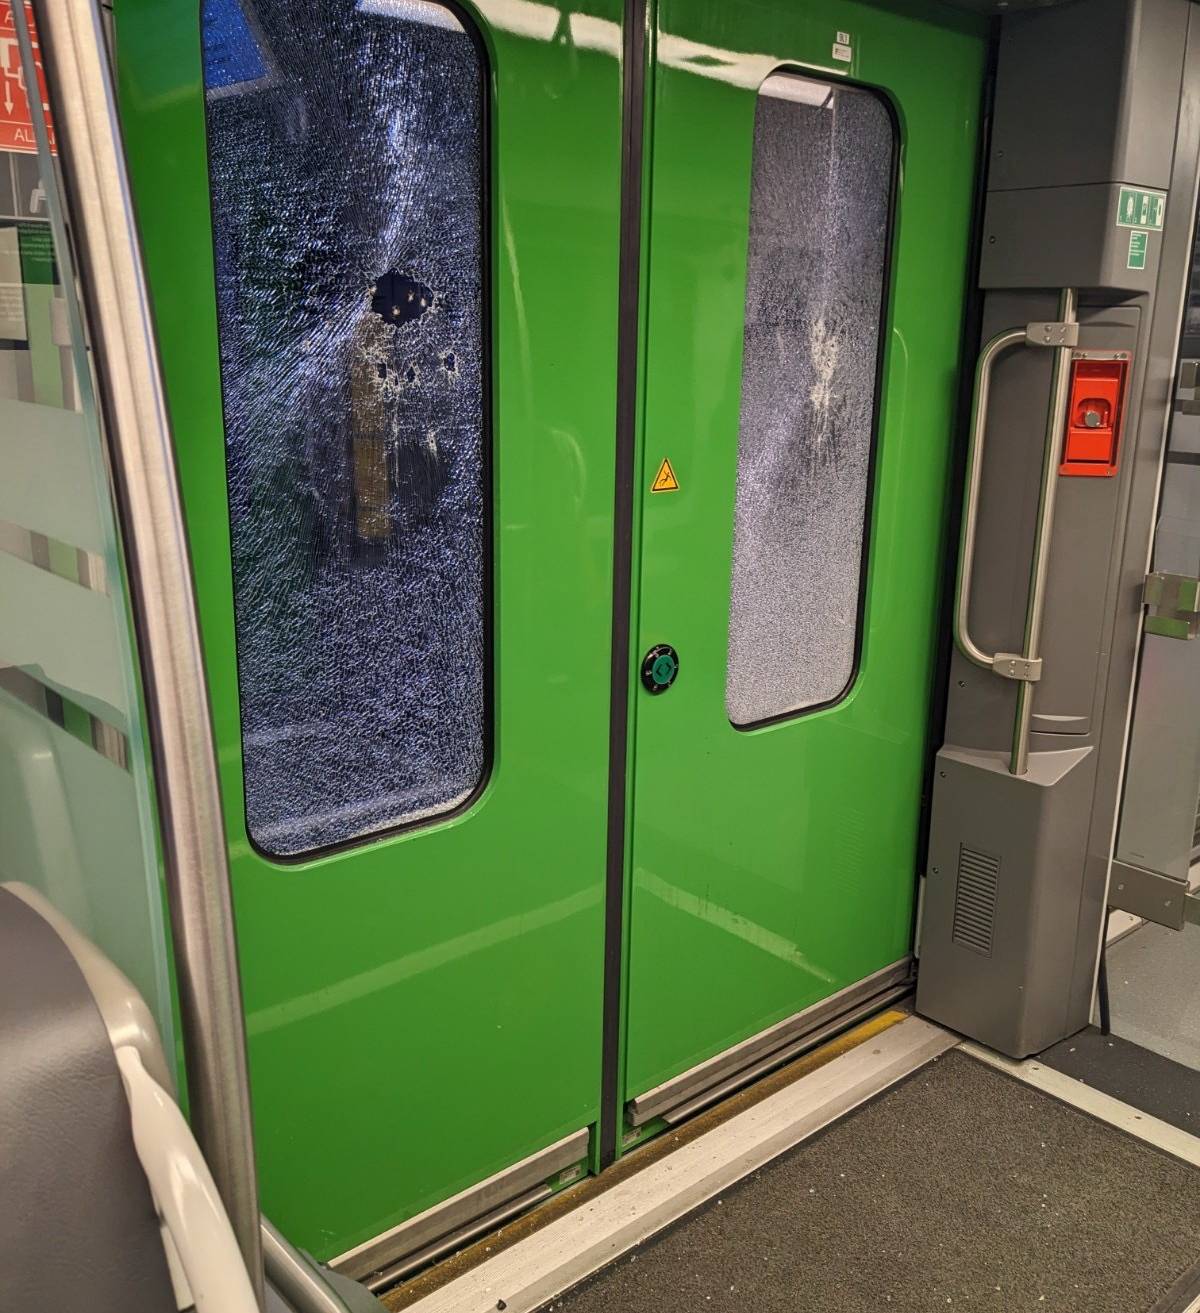 Mann nach Randale in S-Bahn in Wuppertal verhaftet